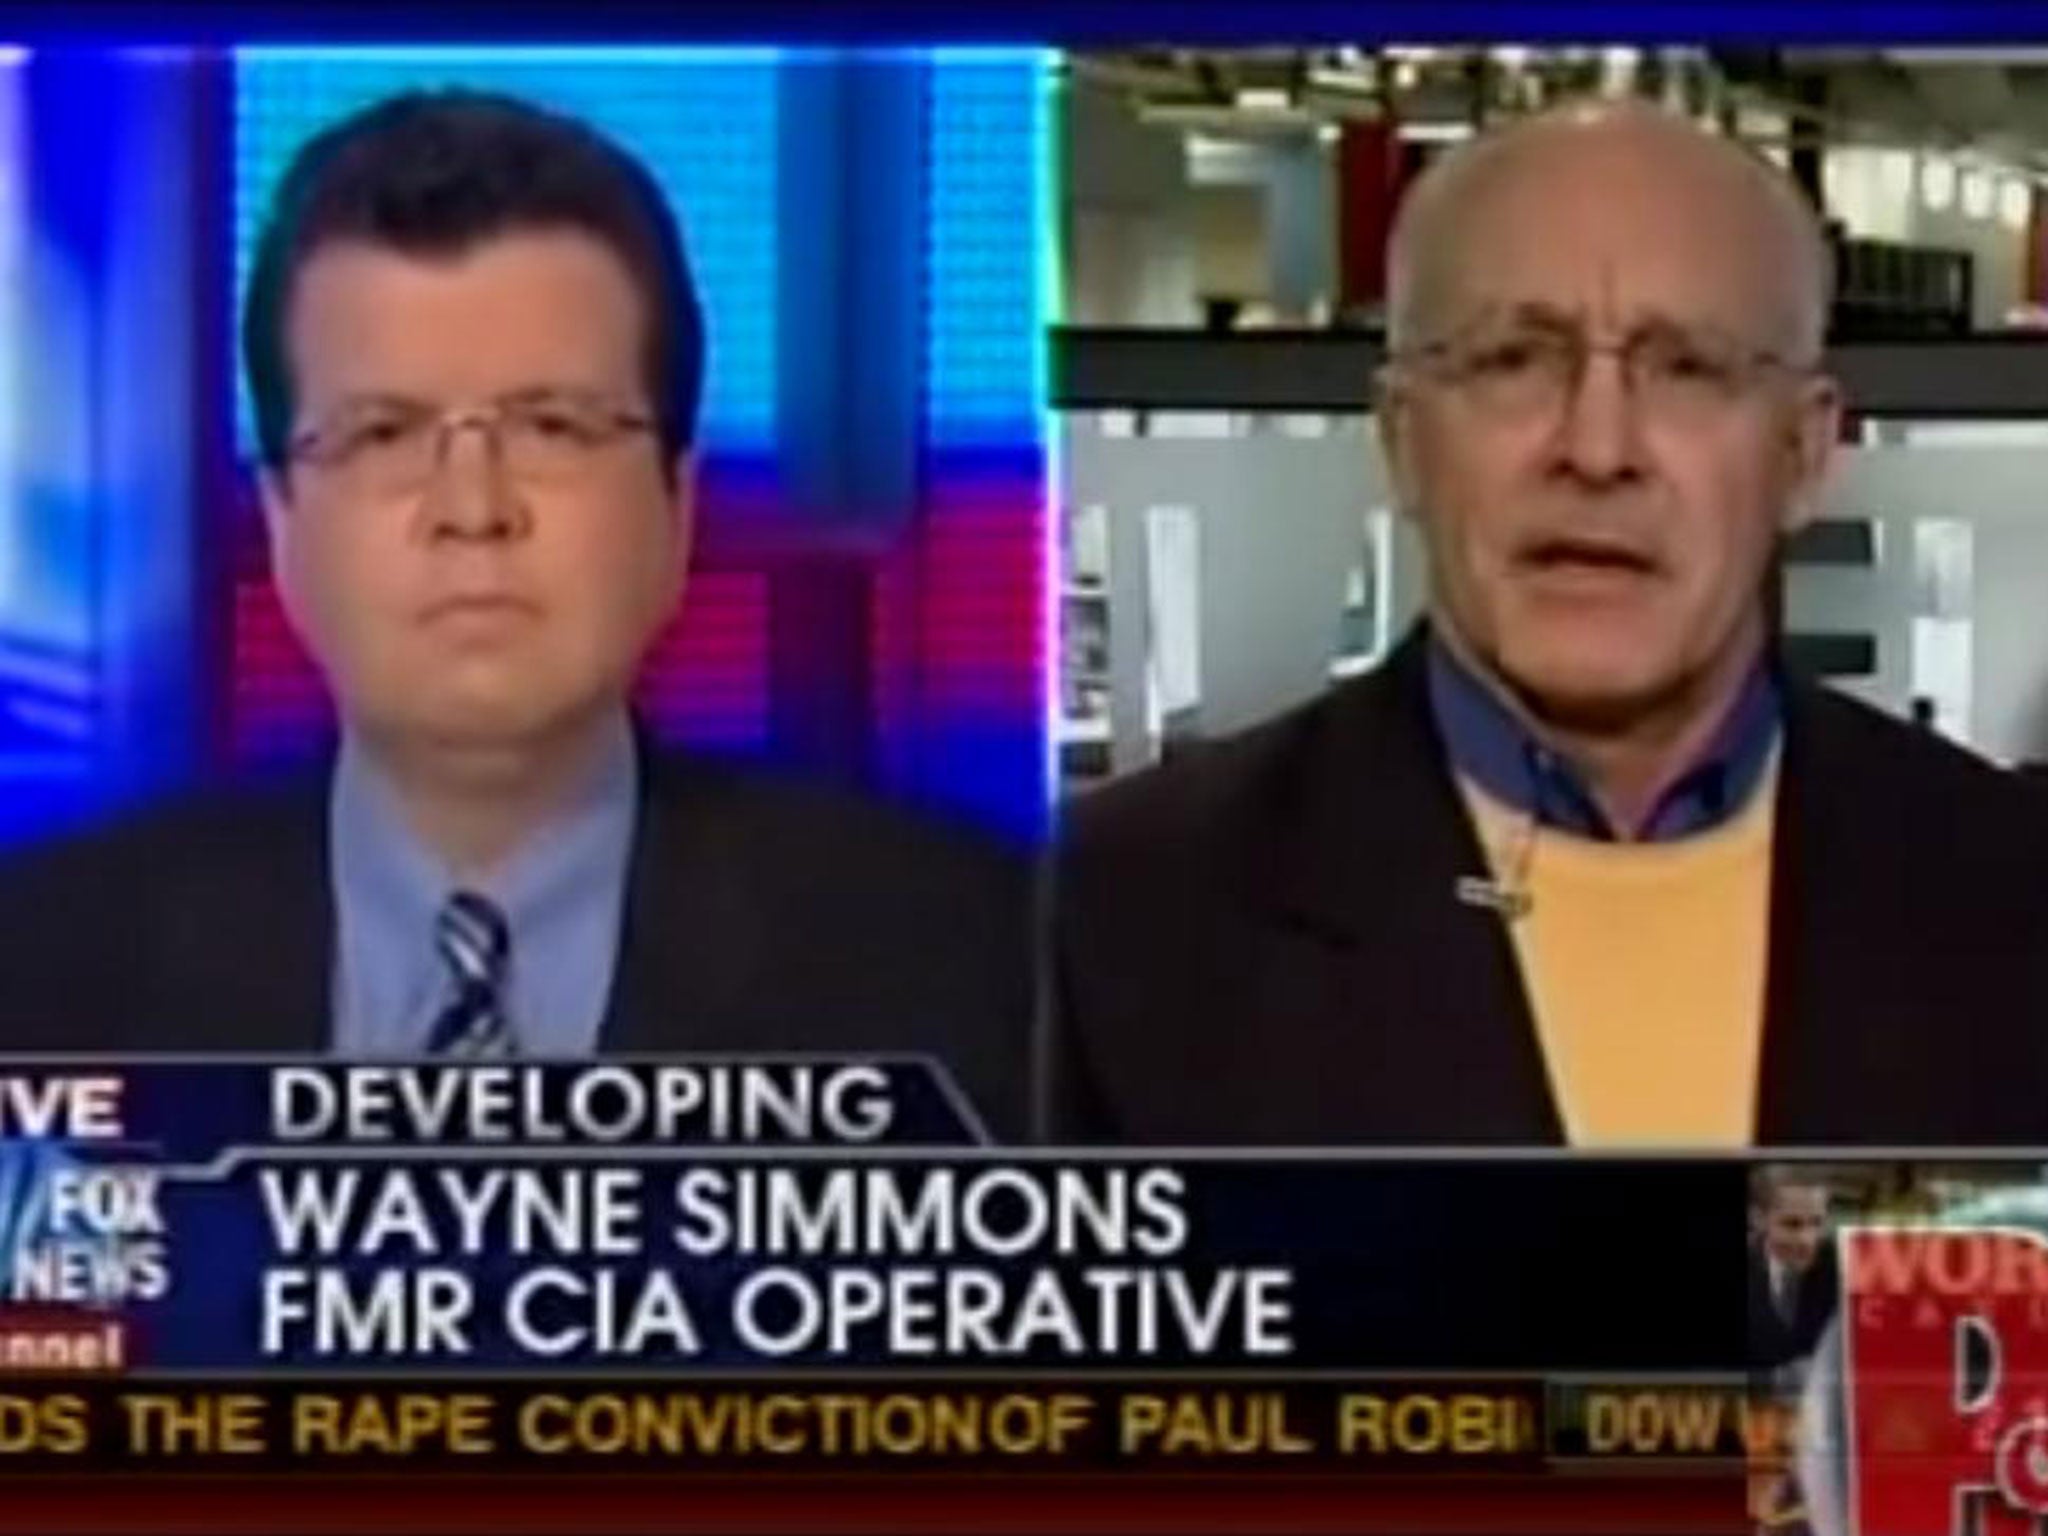 Wayne Simmons appearing on Fox News